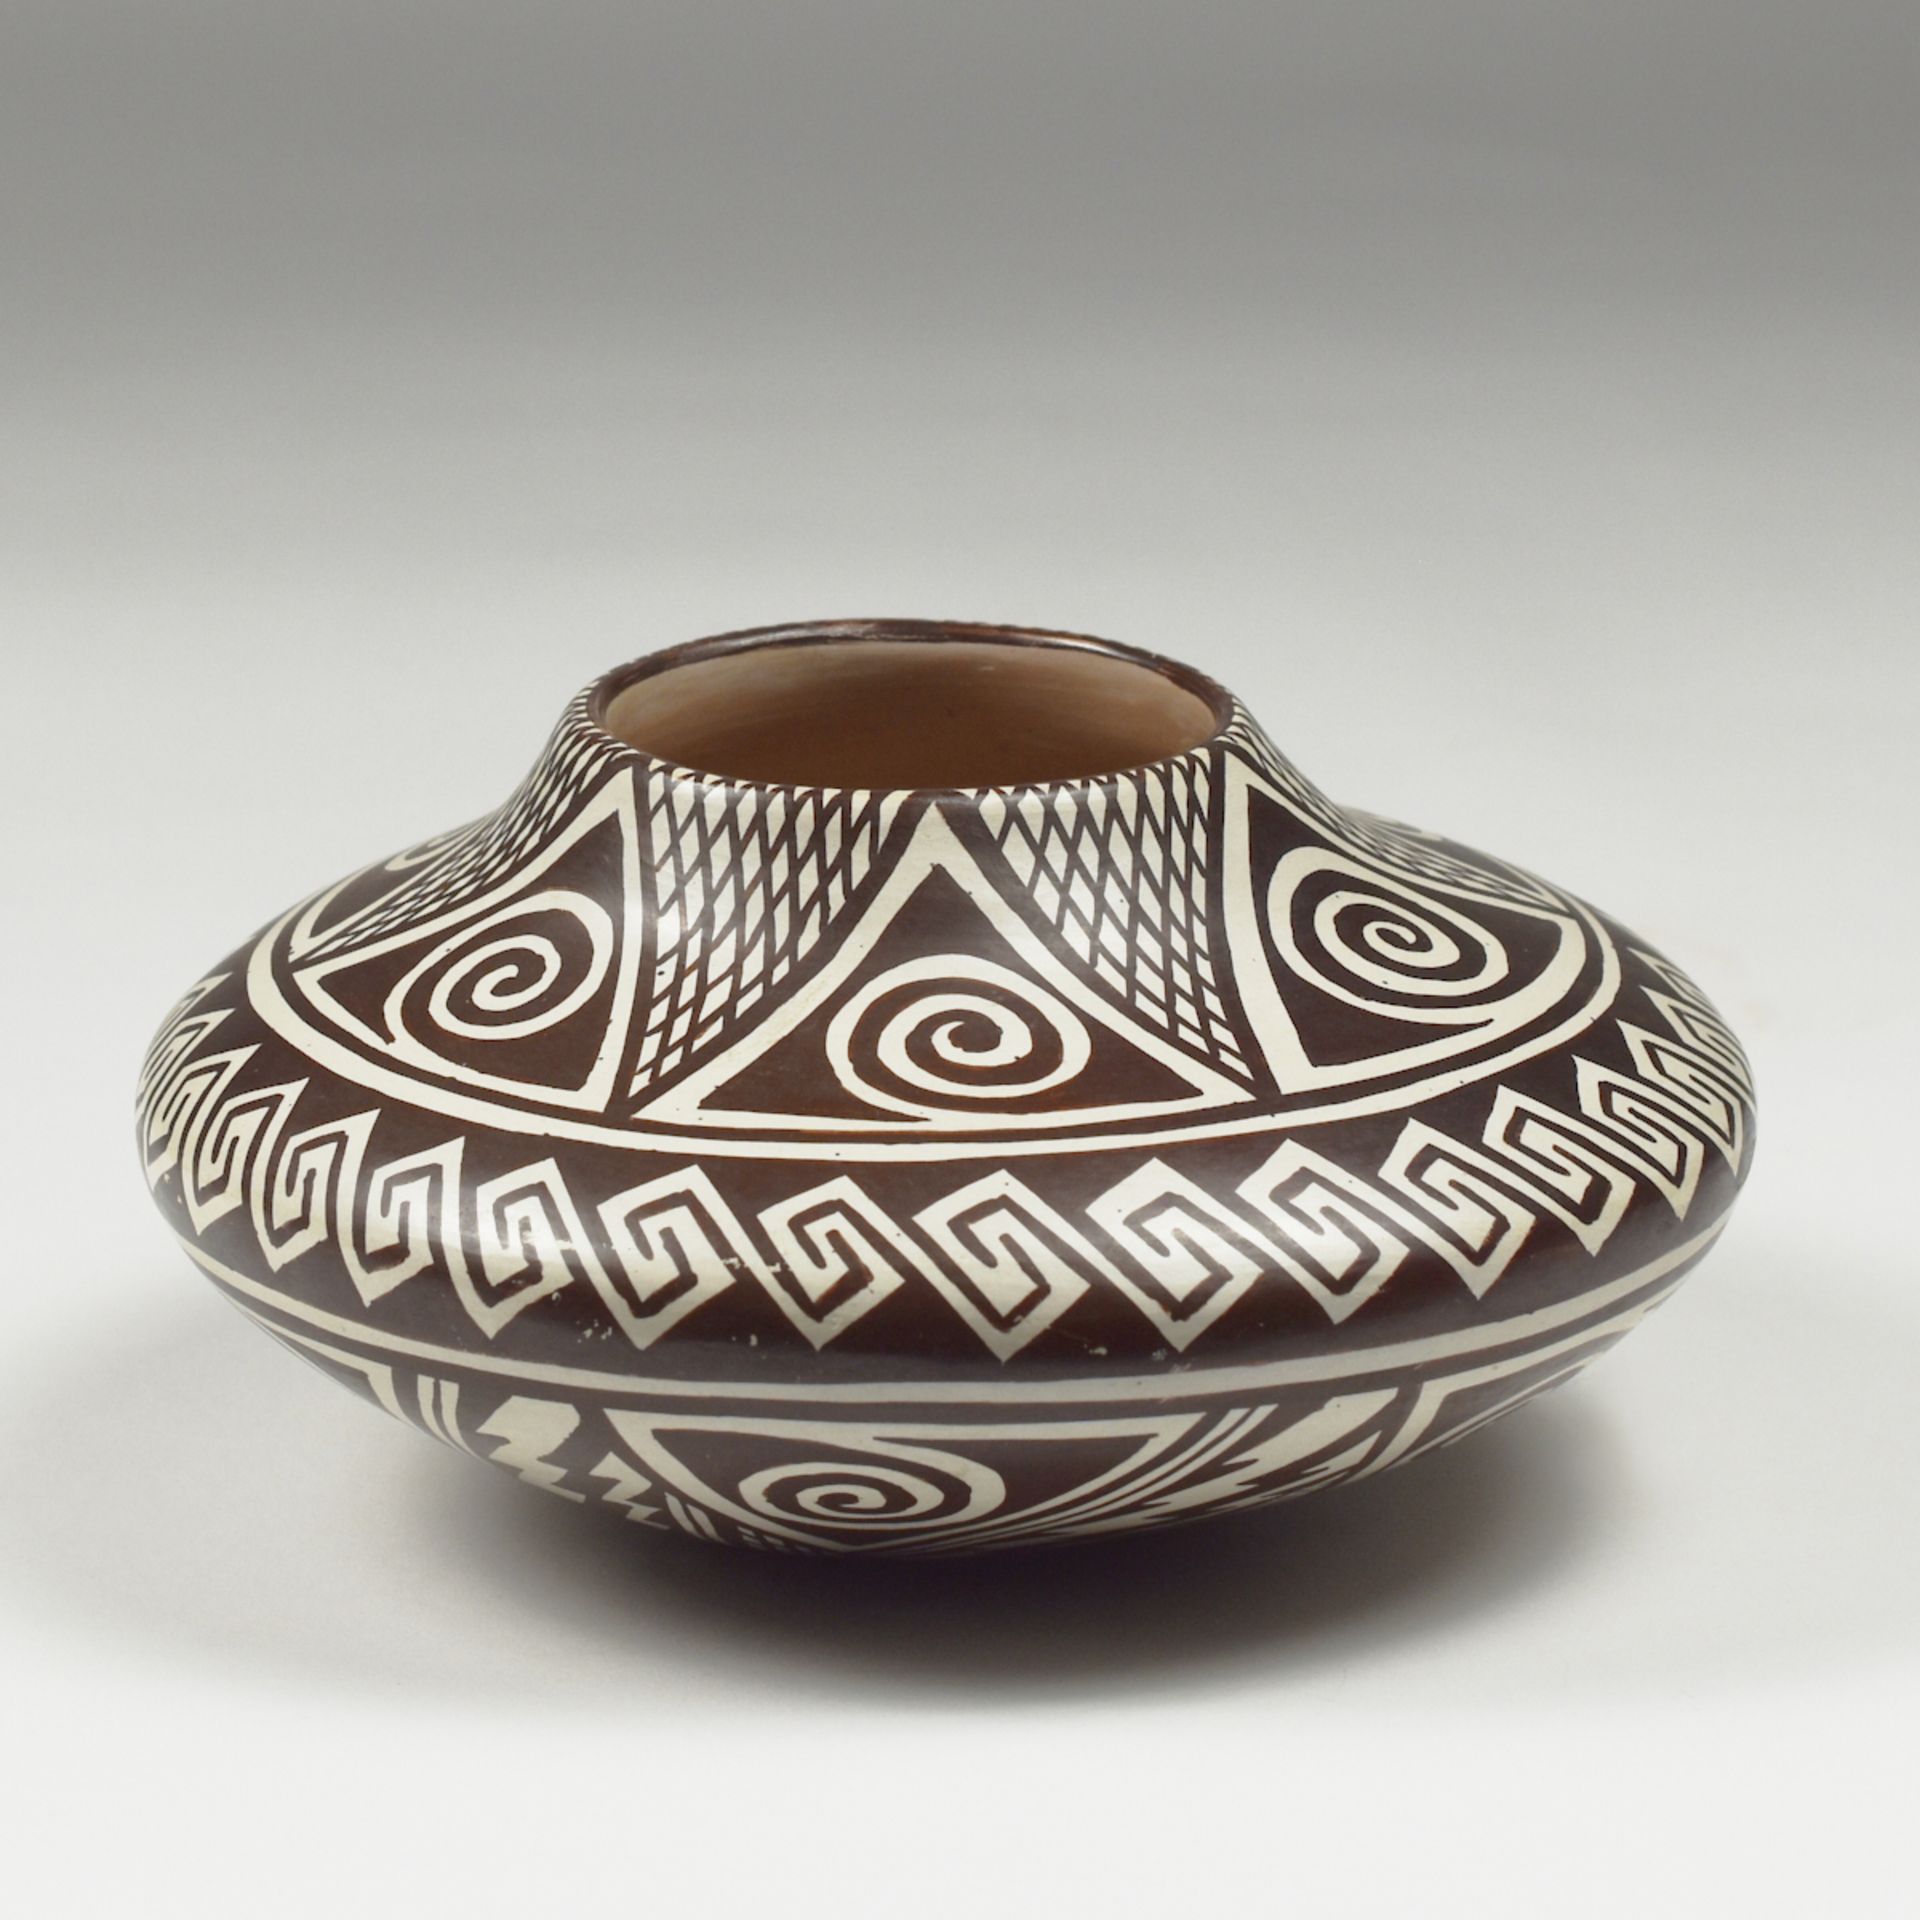 Helen Naha Featherwoman Hopi Pottery Jar - Image 4 of 6